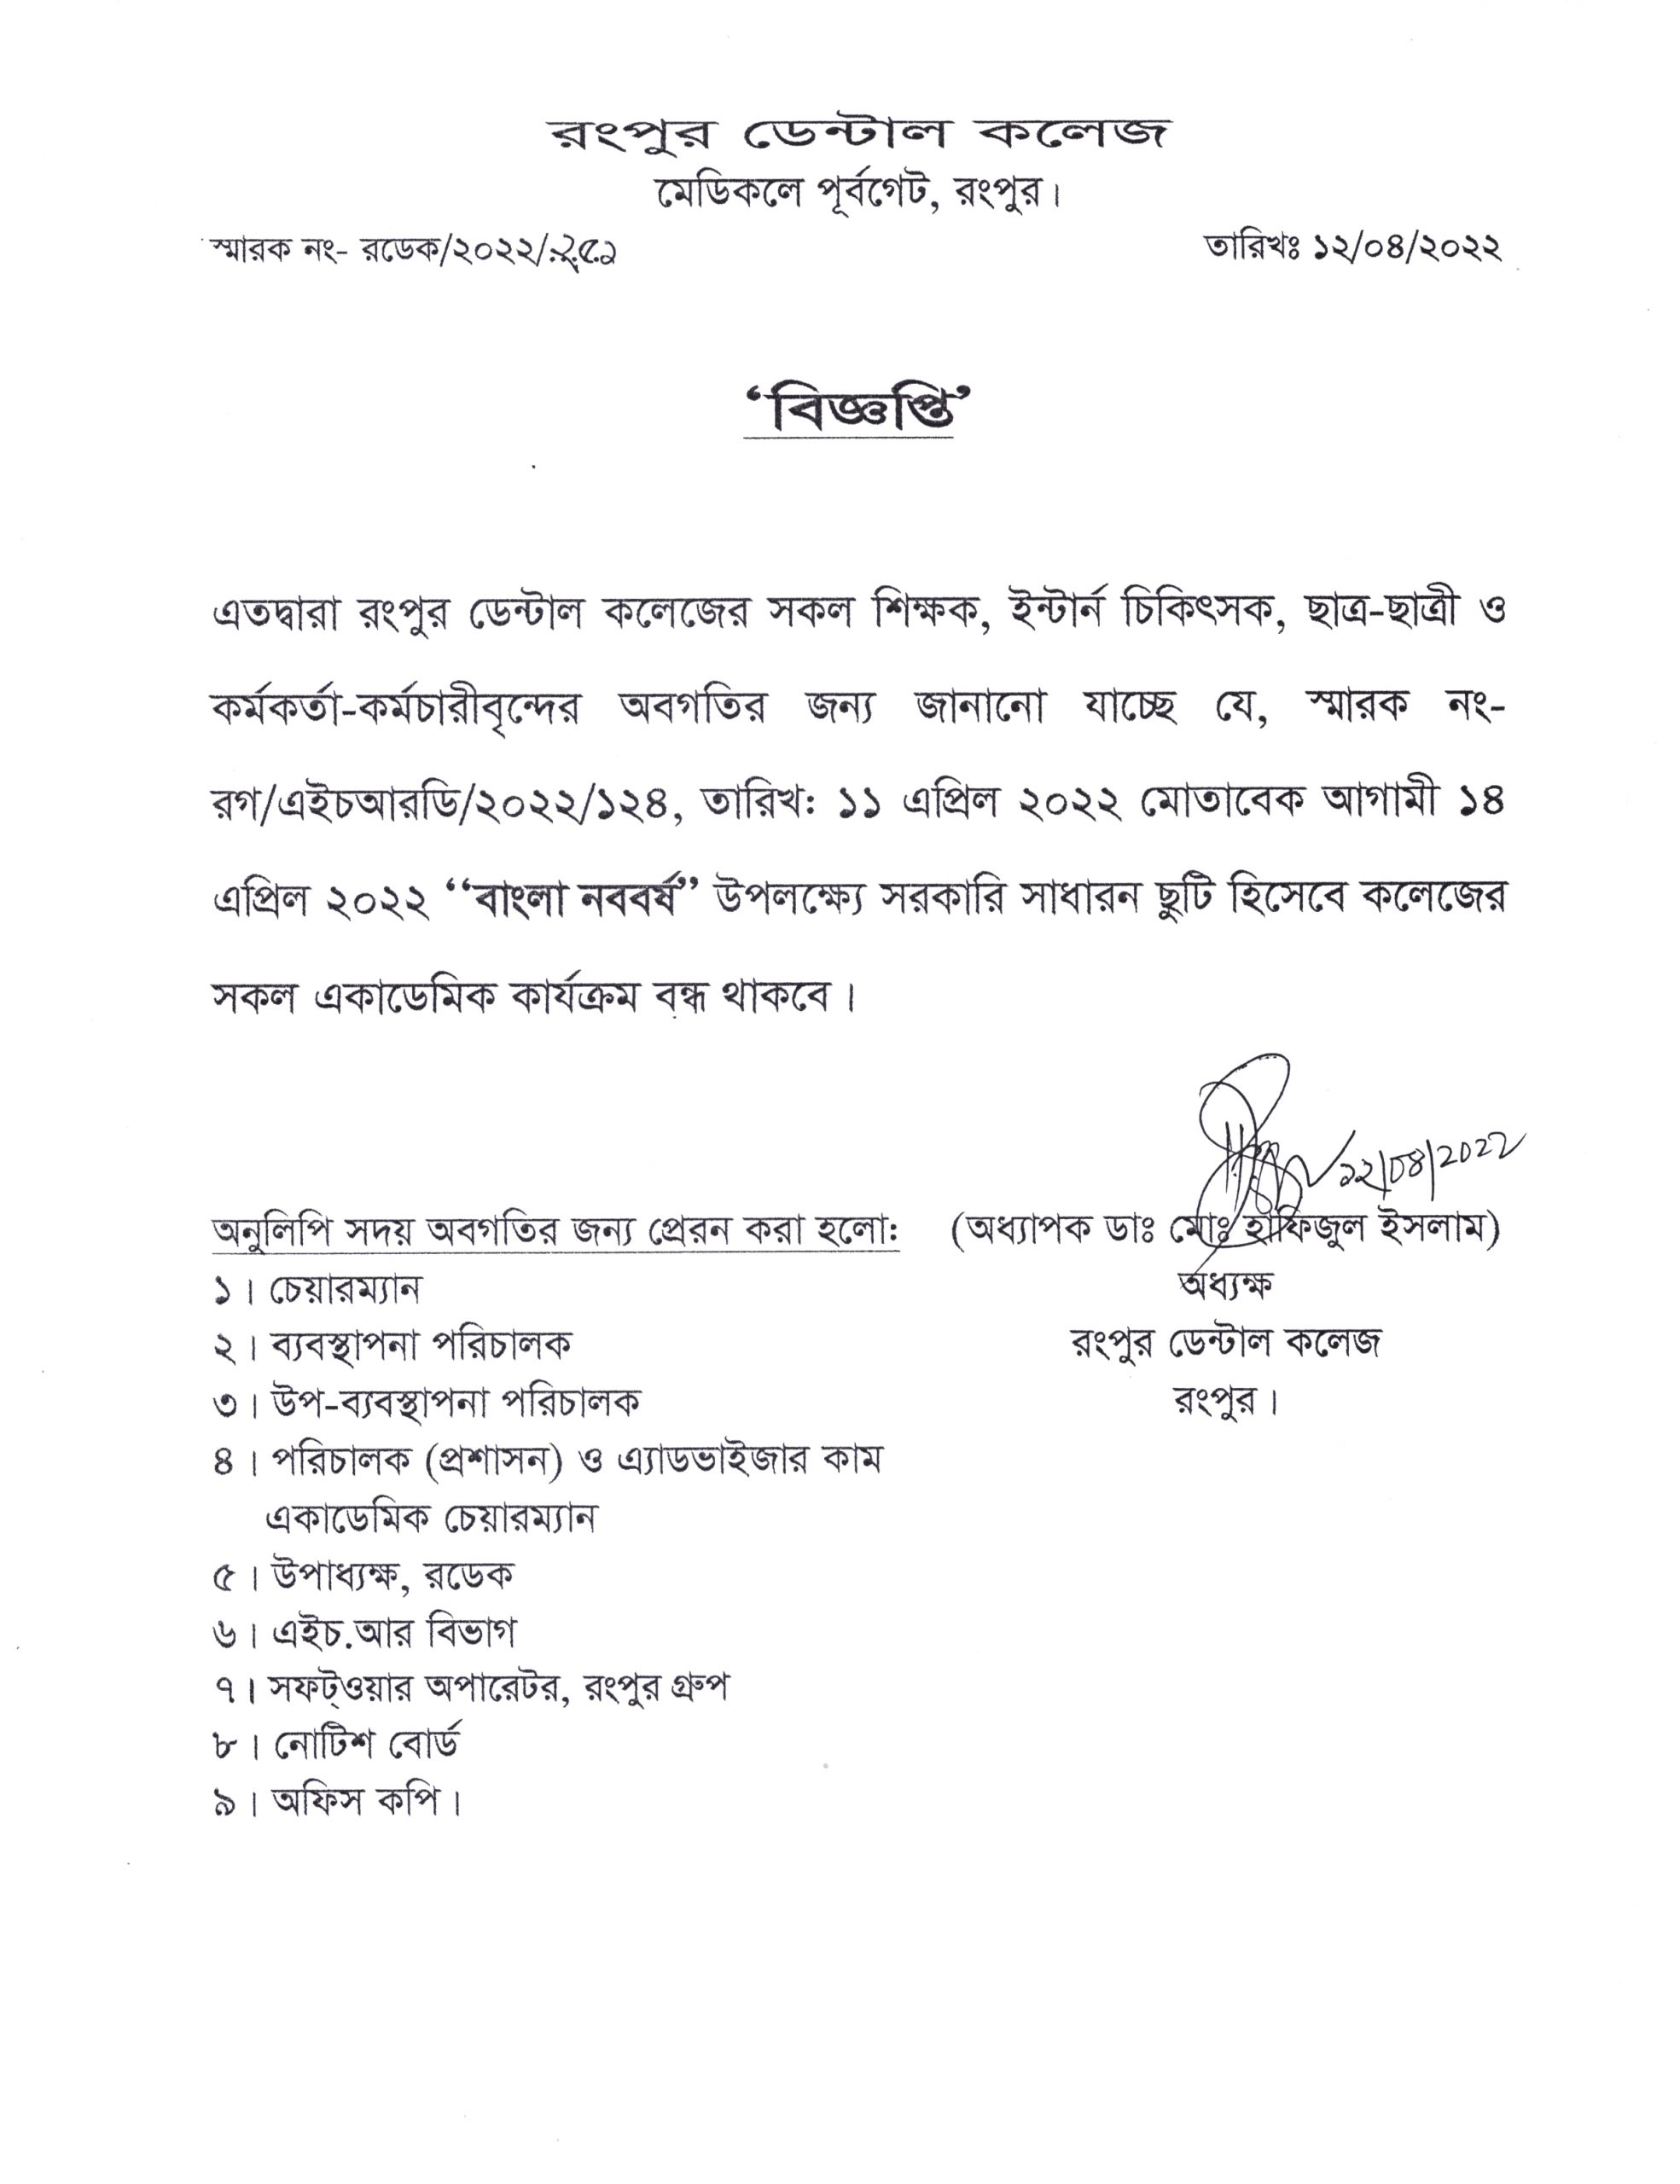 Rdc at Pohela Boishakh 1429, 14 April 2022